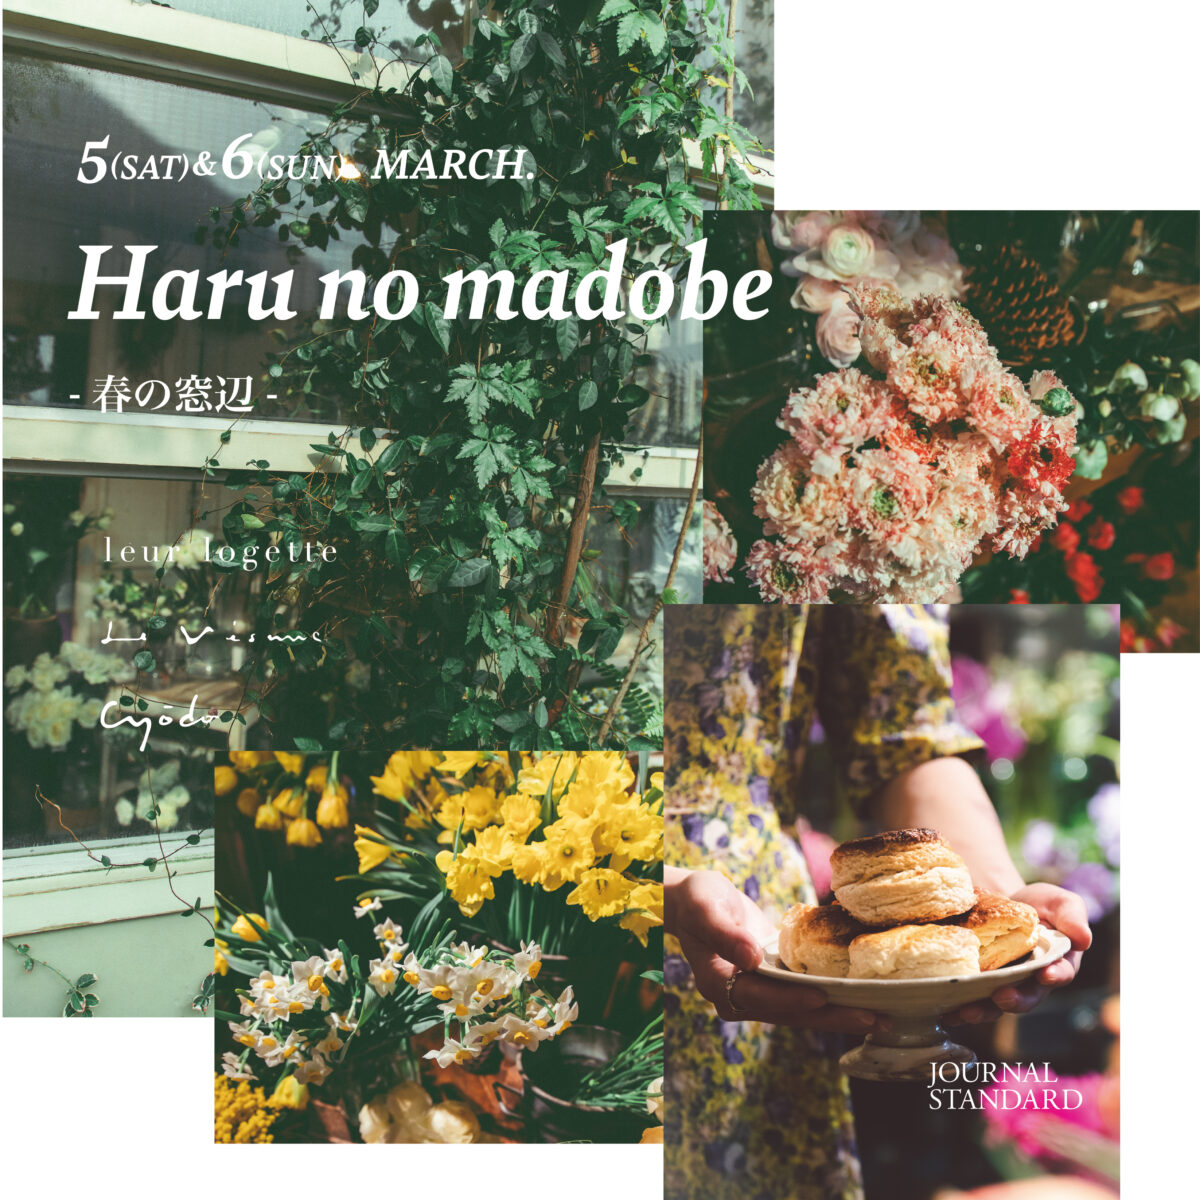 leur logetteがPOP UP STORE「Haru no madobe – 春の窓辺 -」を期間限...